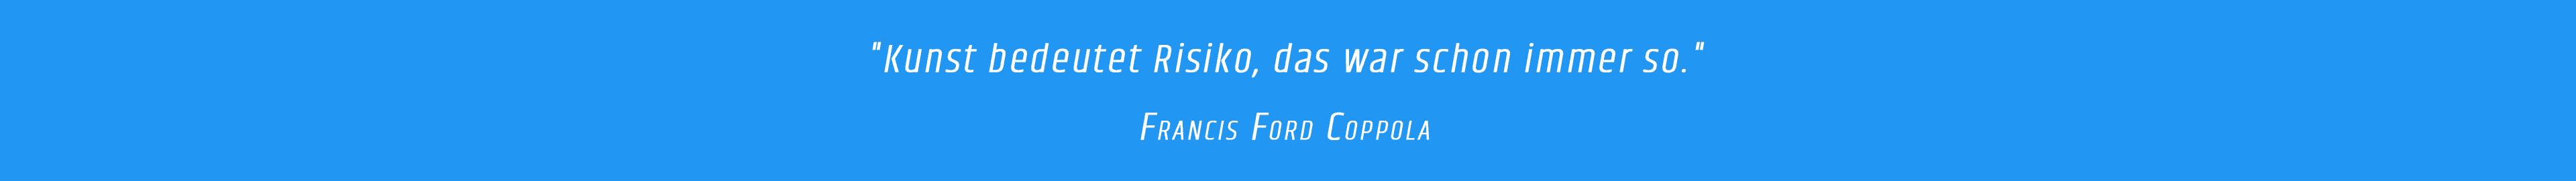 Zitat - Ford Coppola